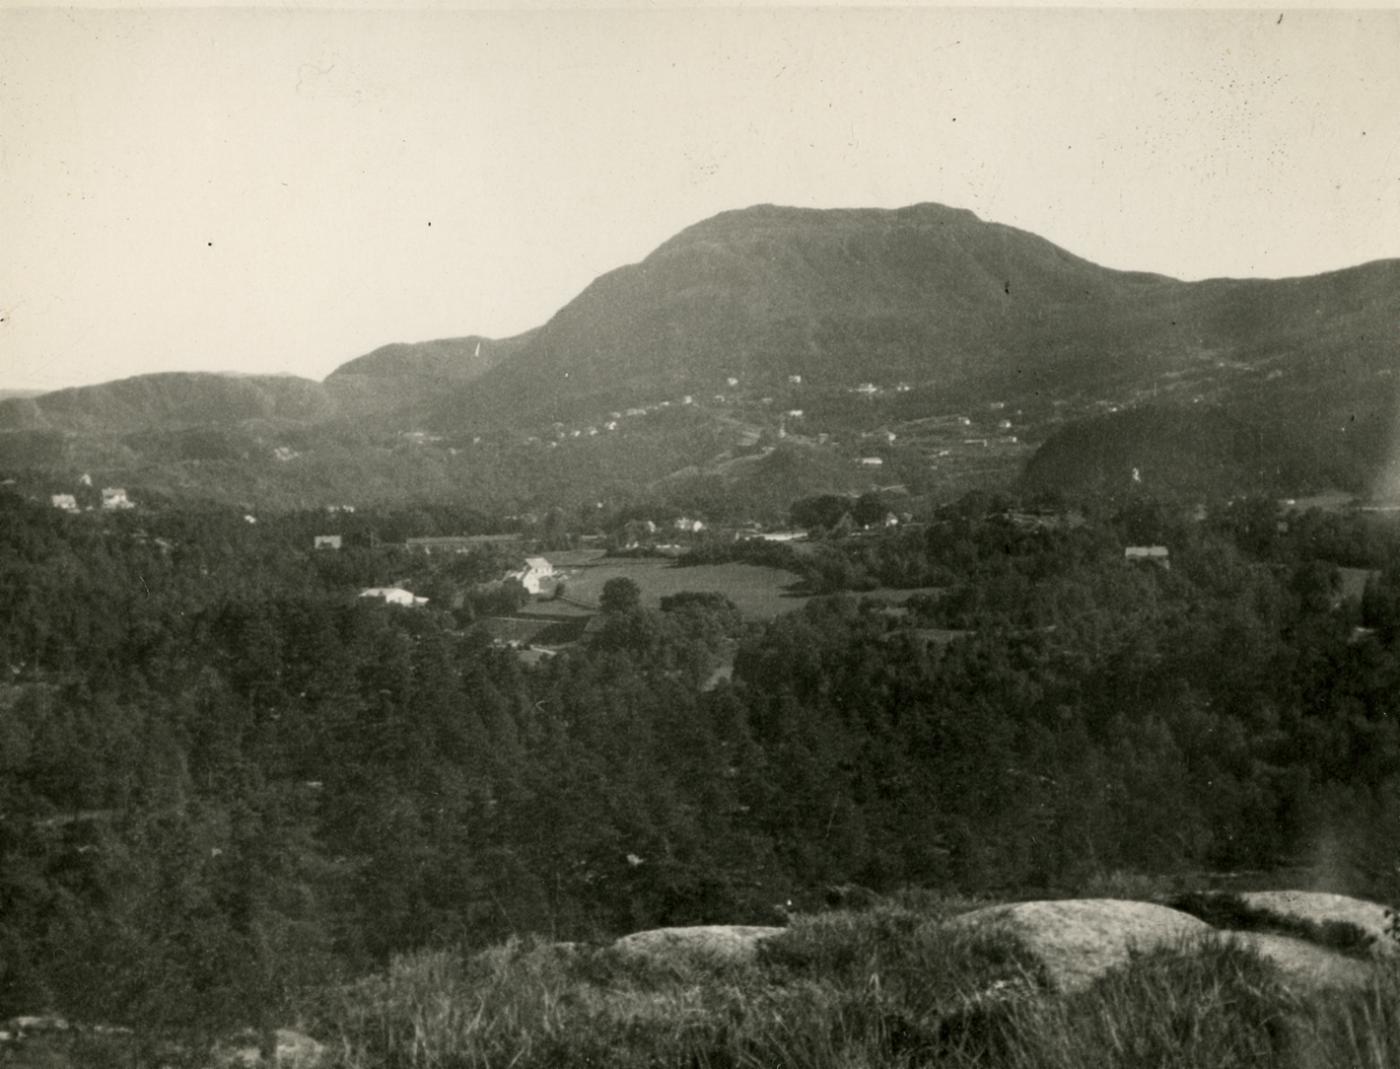 Historisk foto som viser landskap med fjell